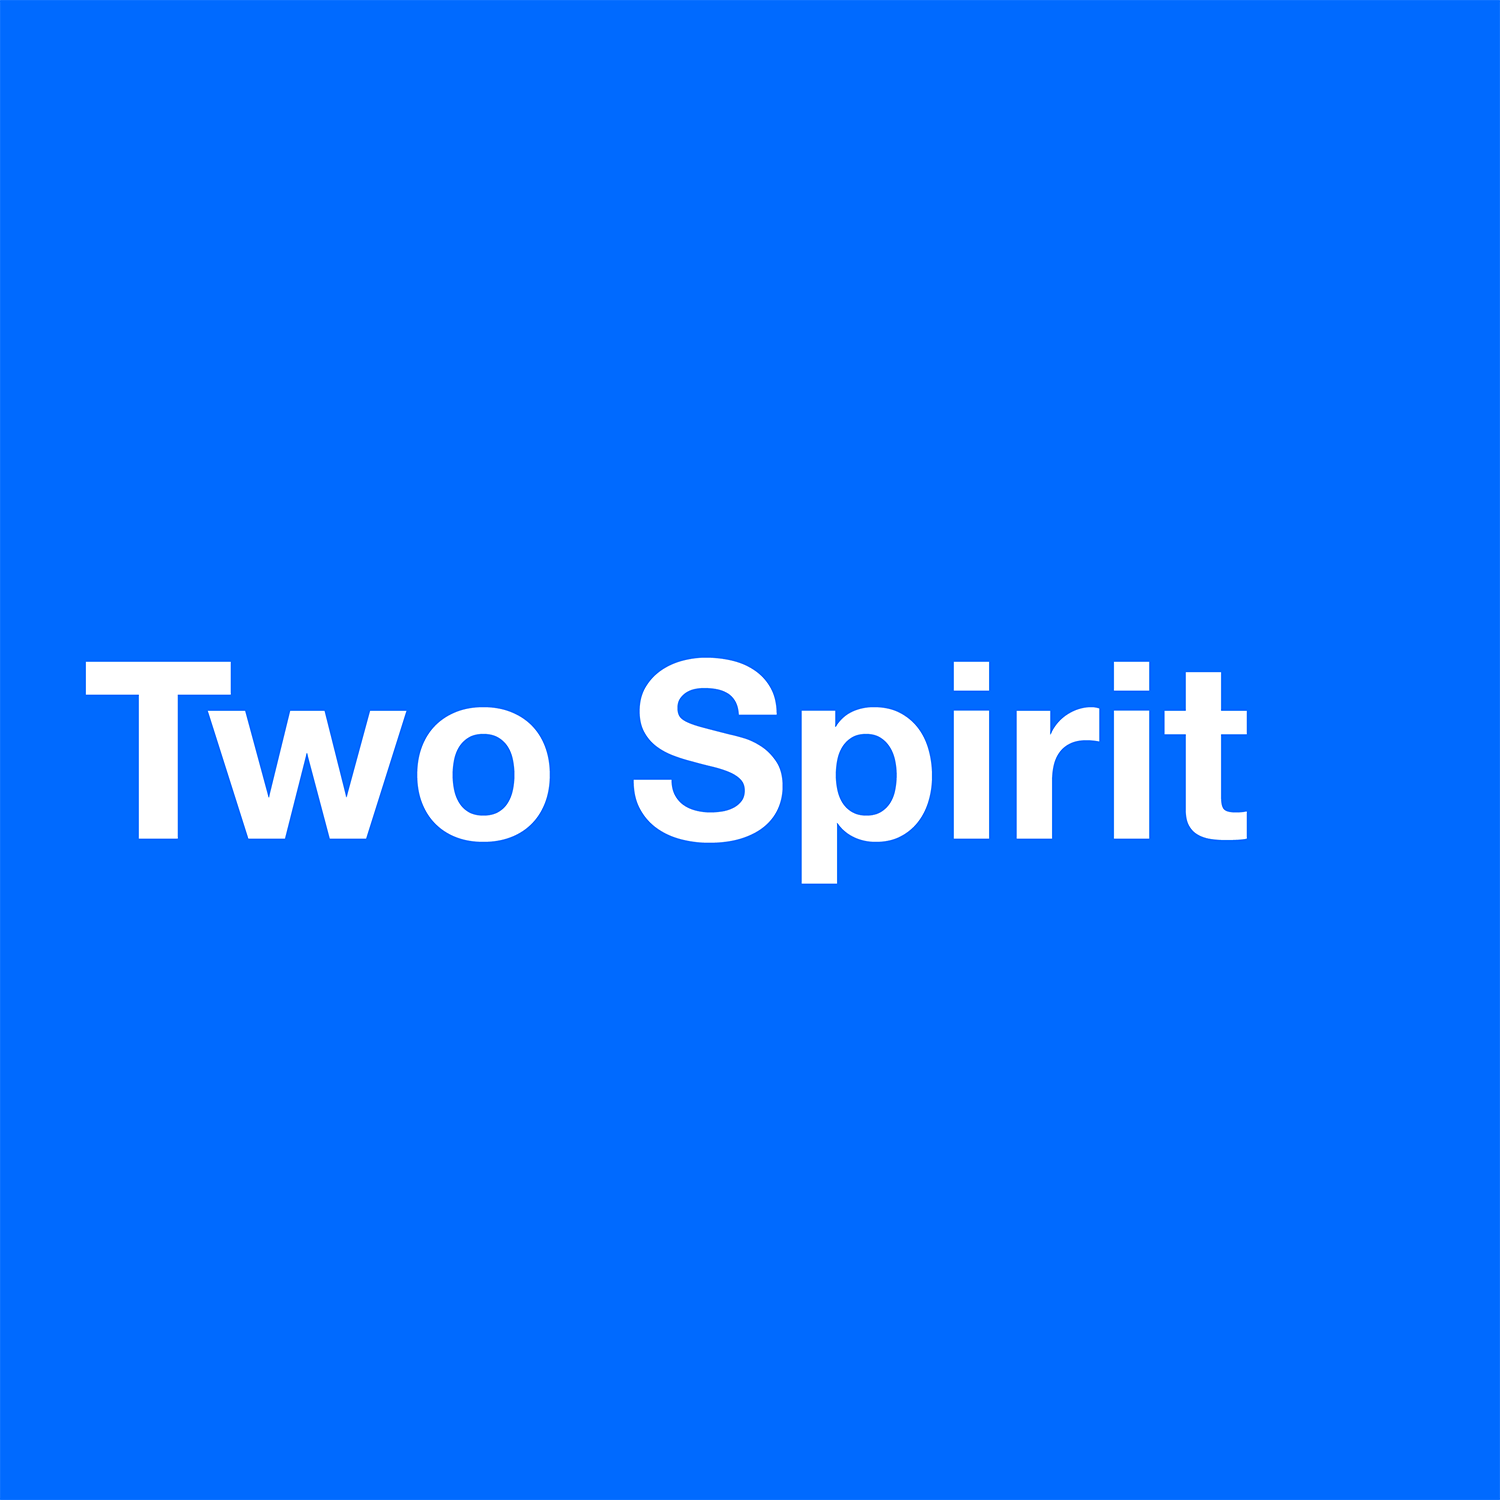  Two Spirit Definition 